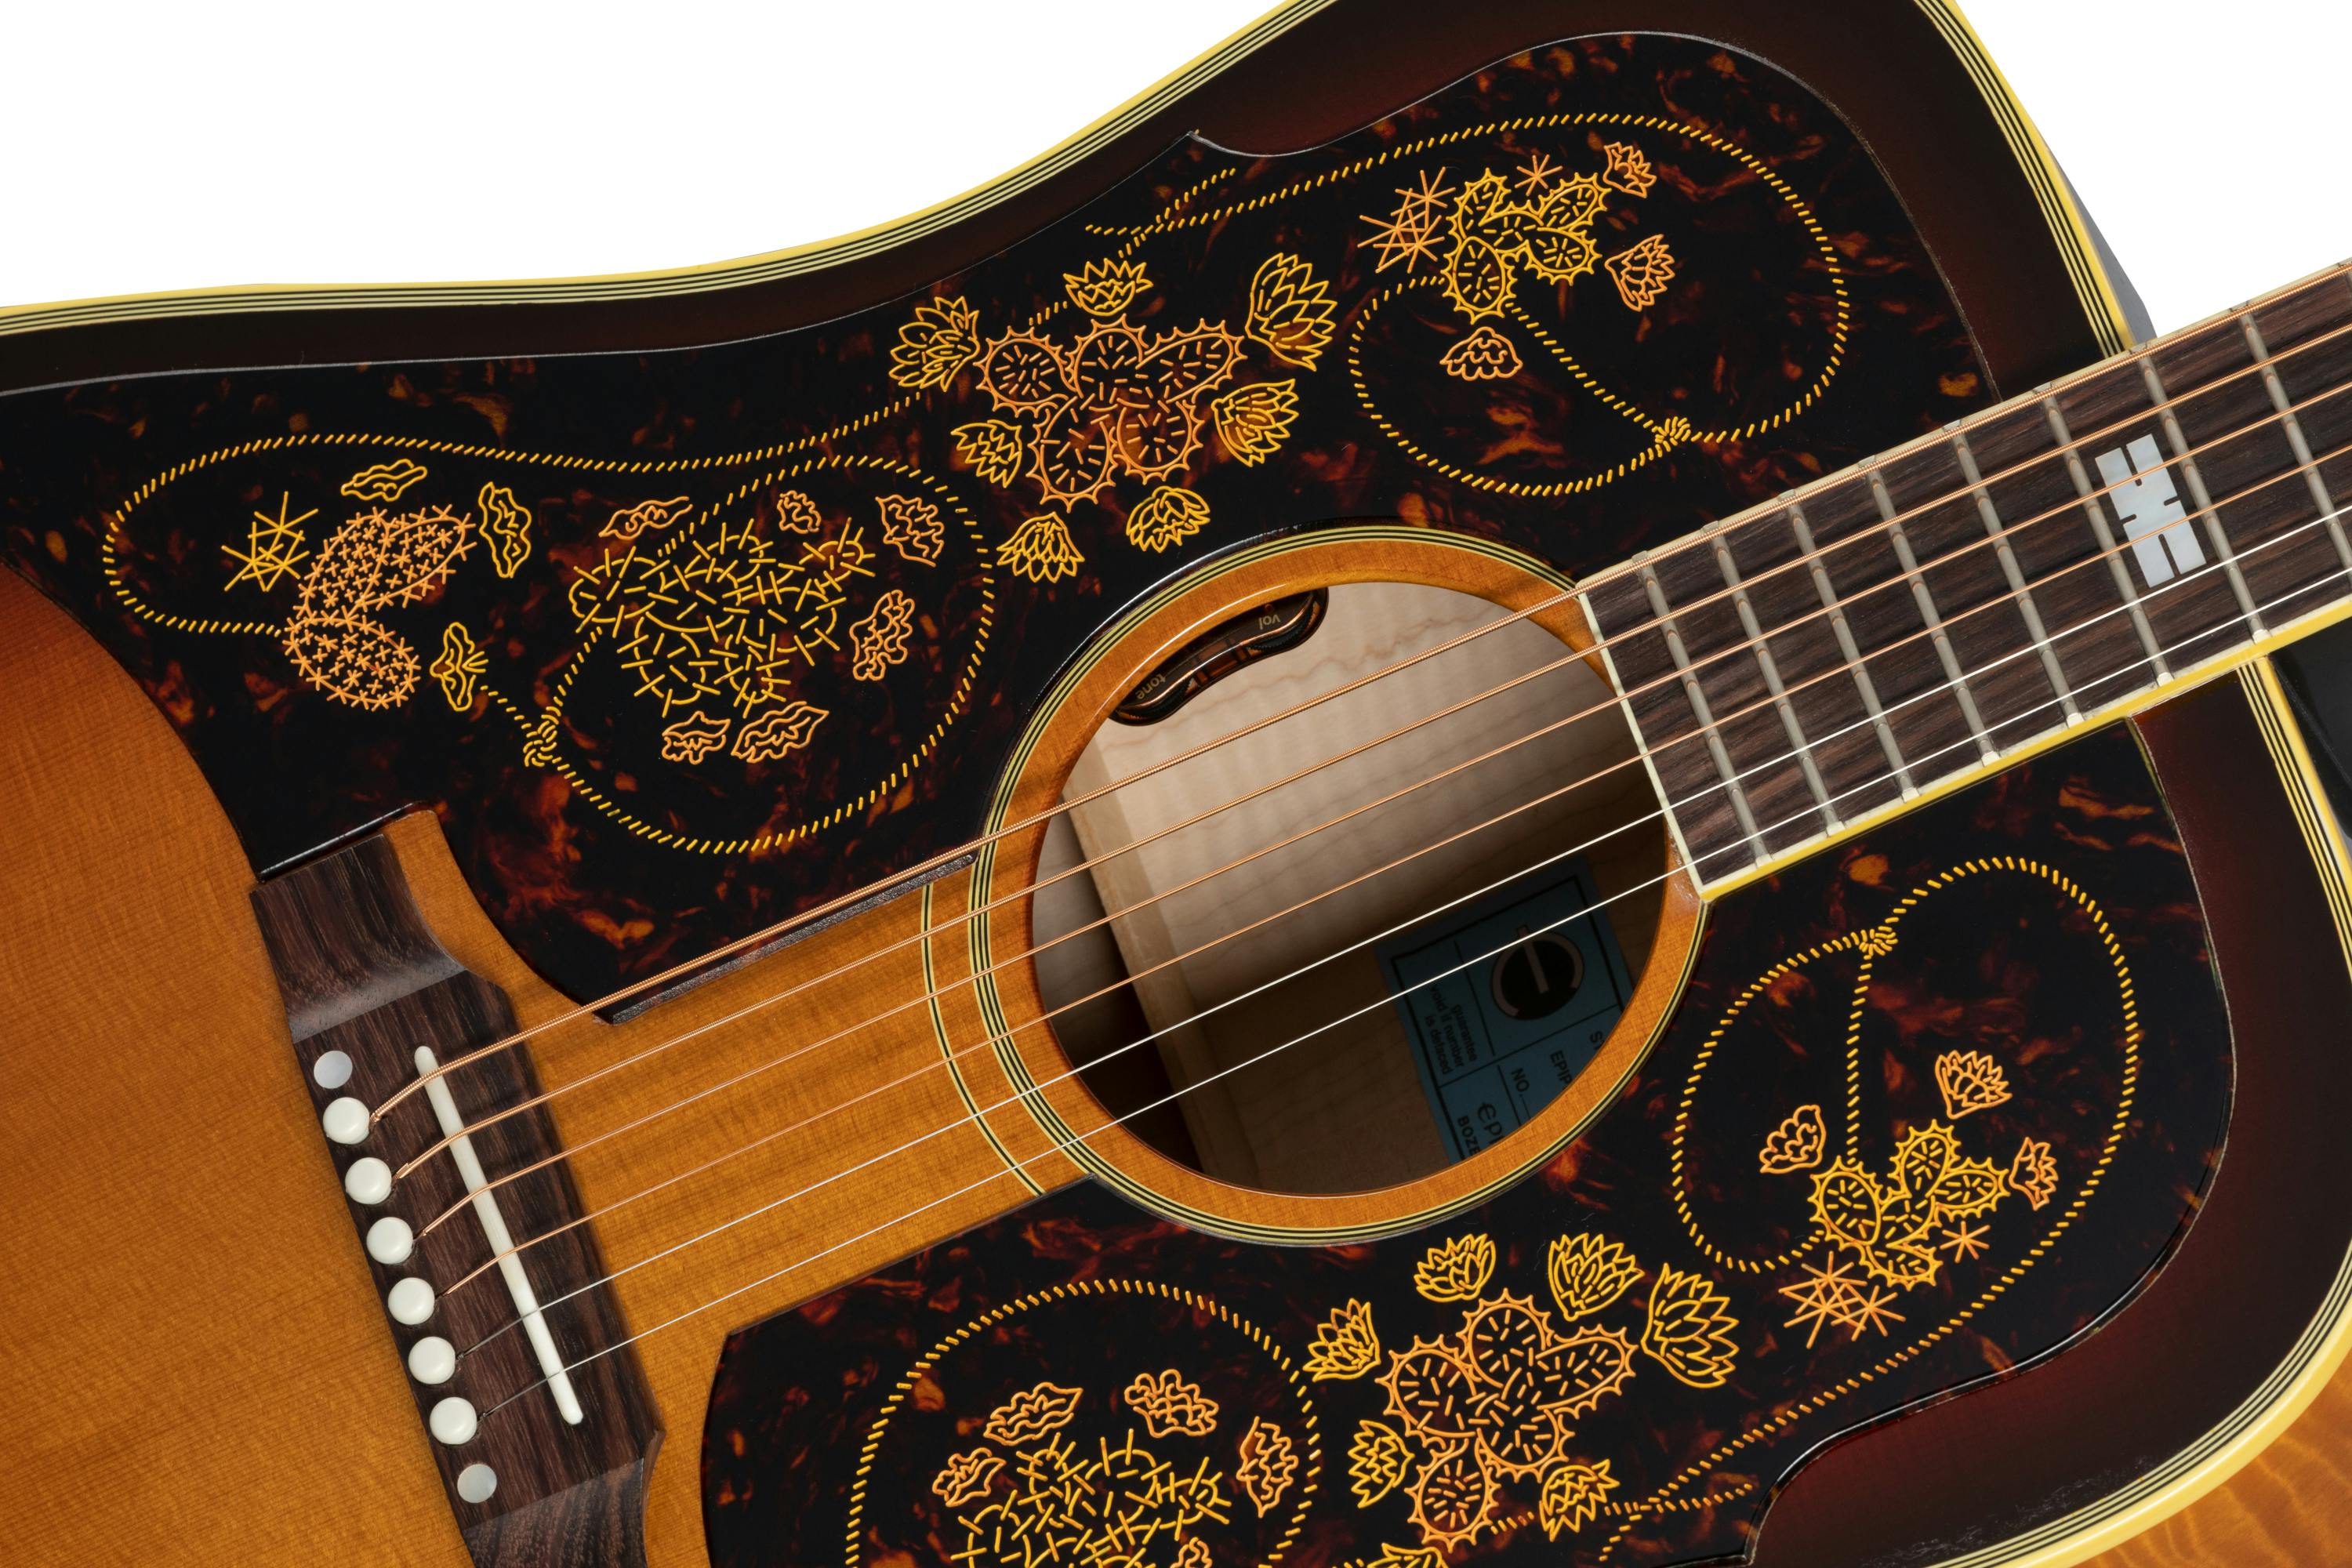 Epiphone USA Chris Stapleton Signature Frontier Electro Acoustic Guitar